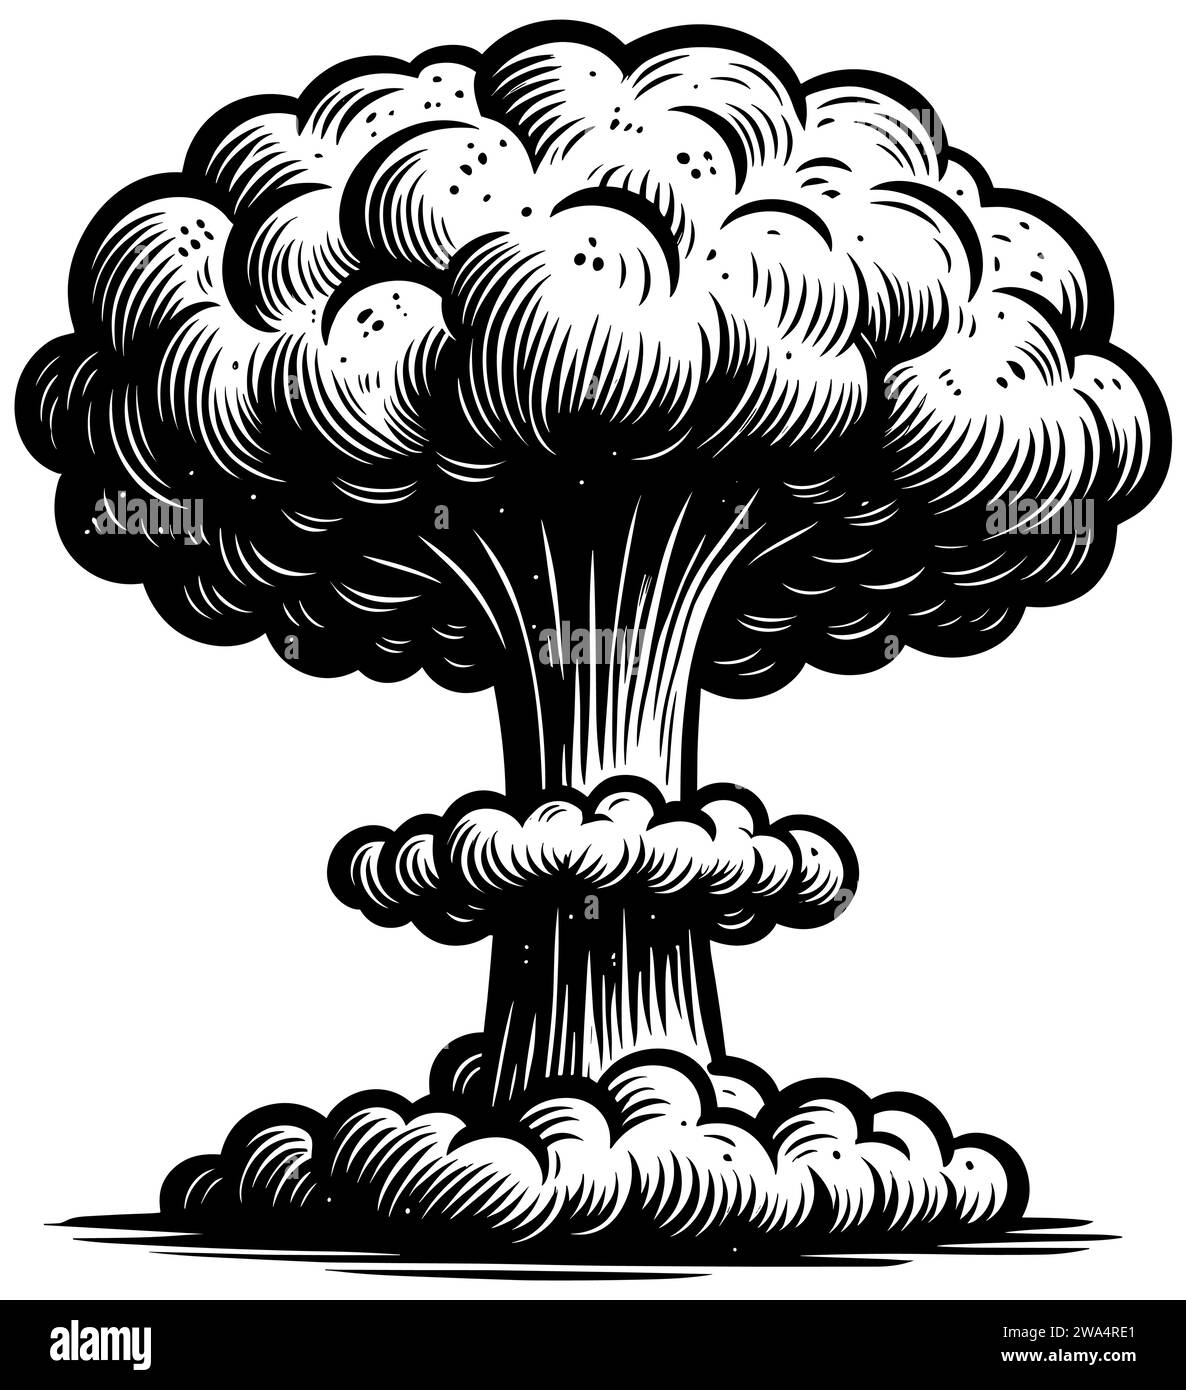 Atomexplosion mit Pilzwolke im Holzschnitt. Stock Vektor